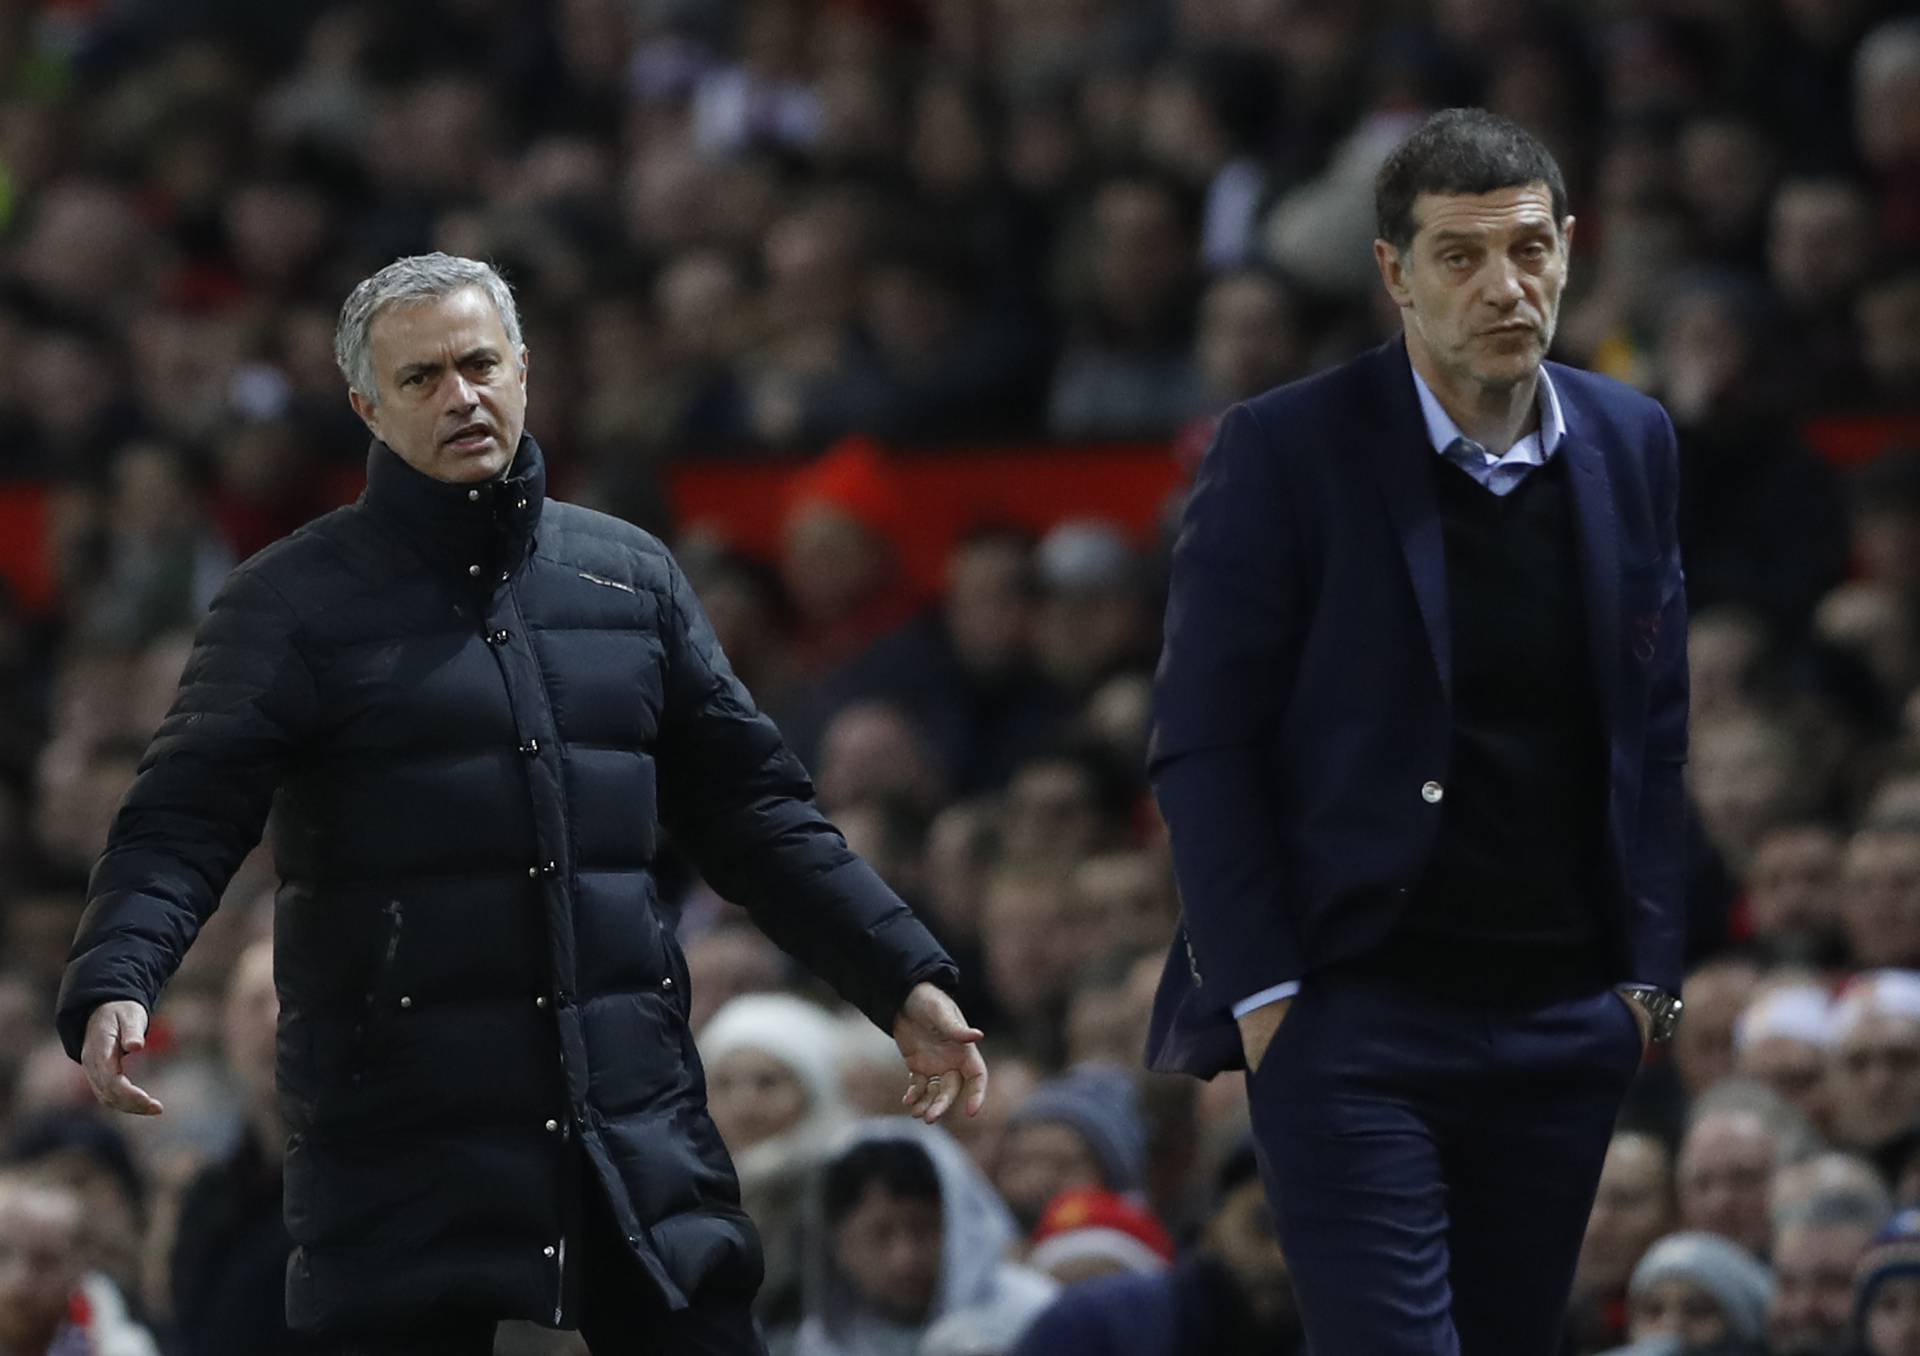 Manchester United manager Jose Mourinho and West Ham United manager Slaven Bilic